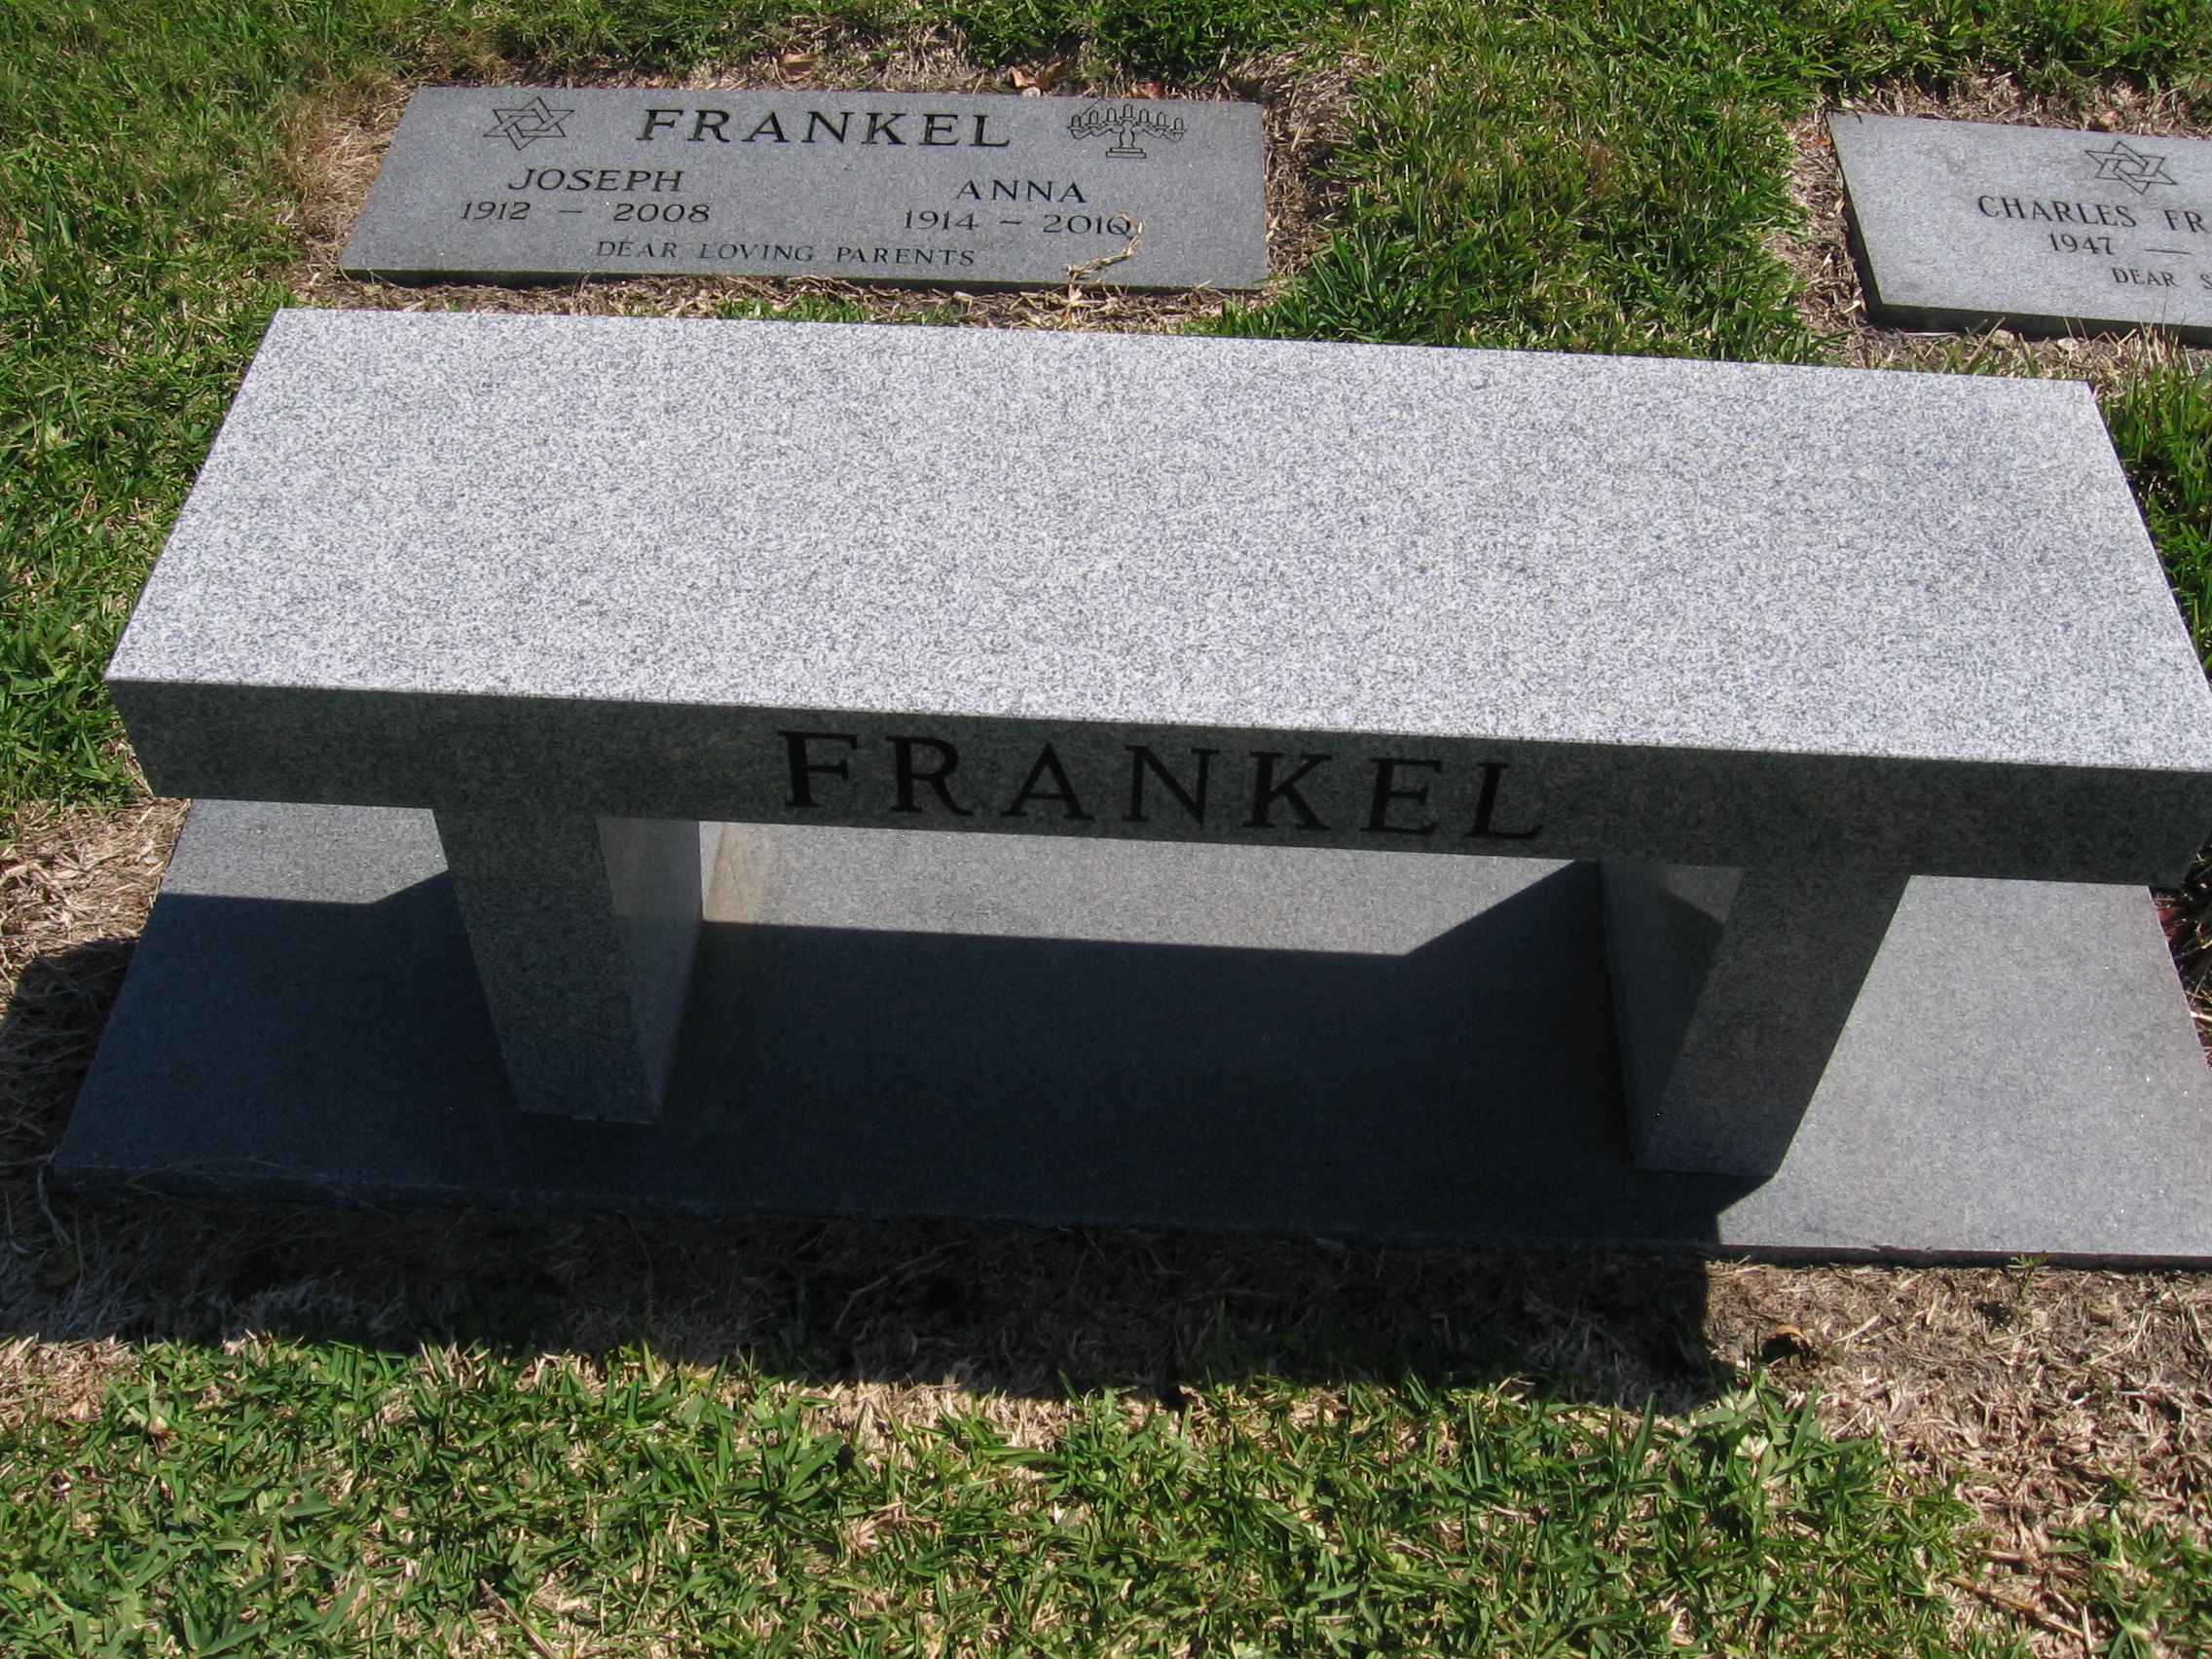 Anna Frankel